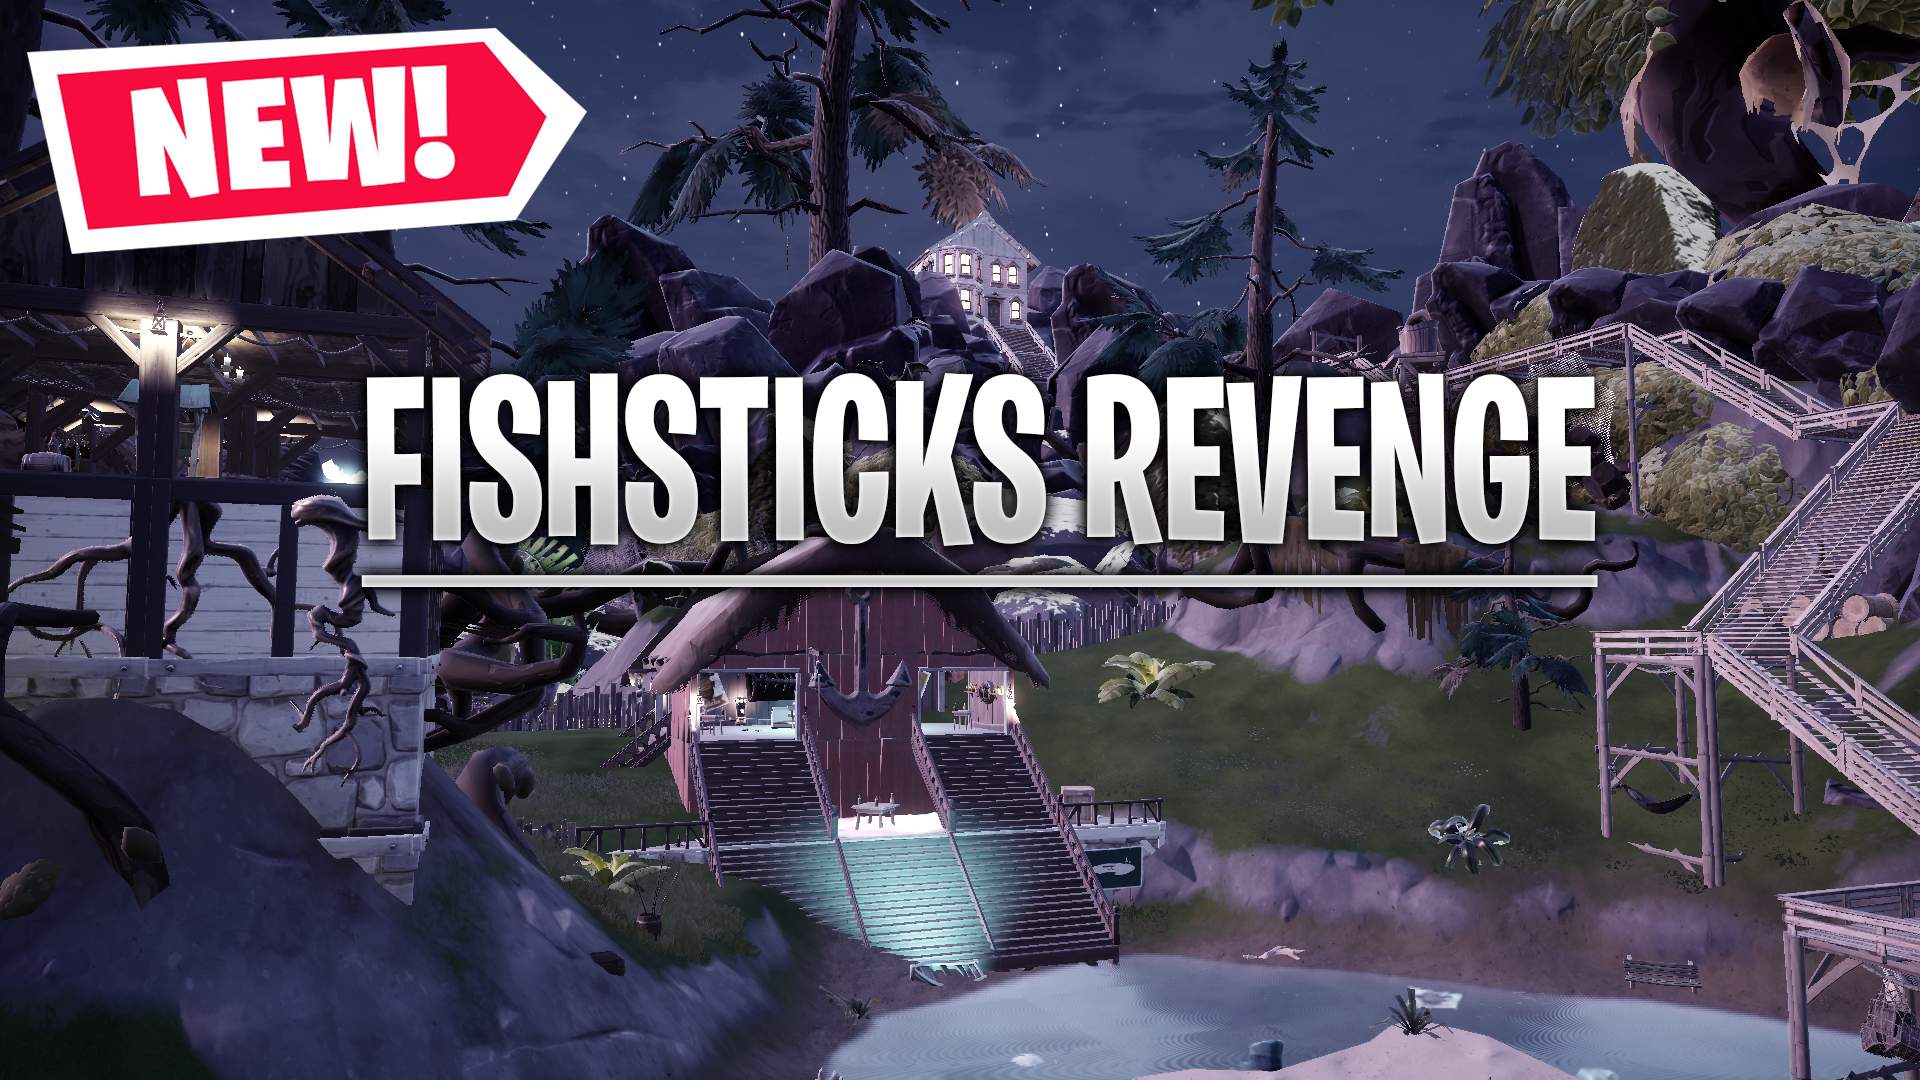 Fishsticks Revenge Gun Game! - Fortnite Creative Gun Game and Horror Map  Code